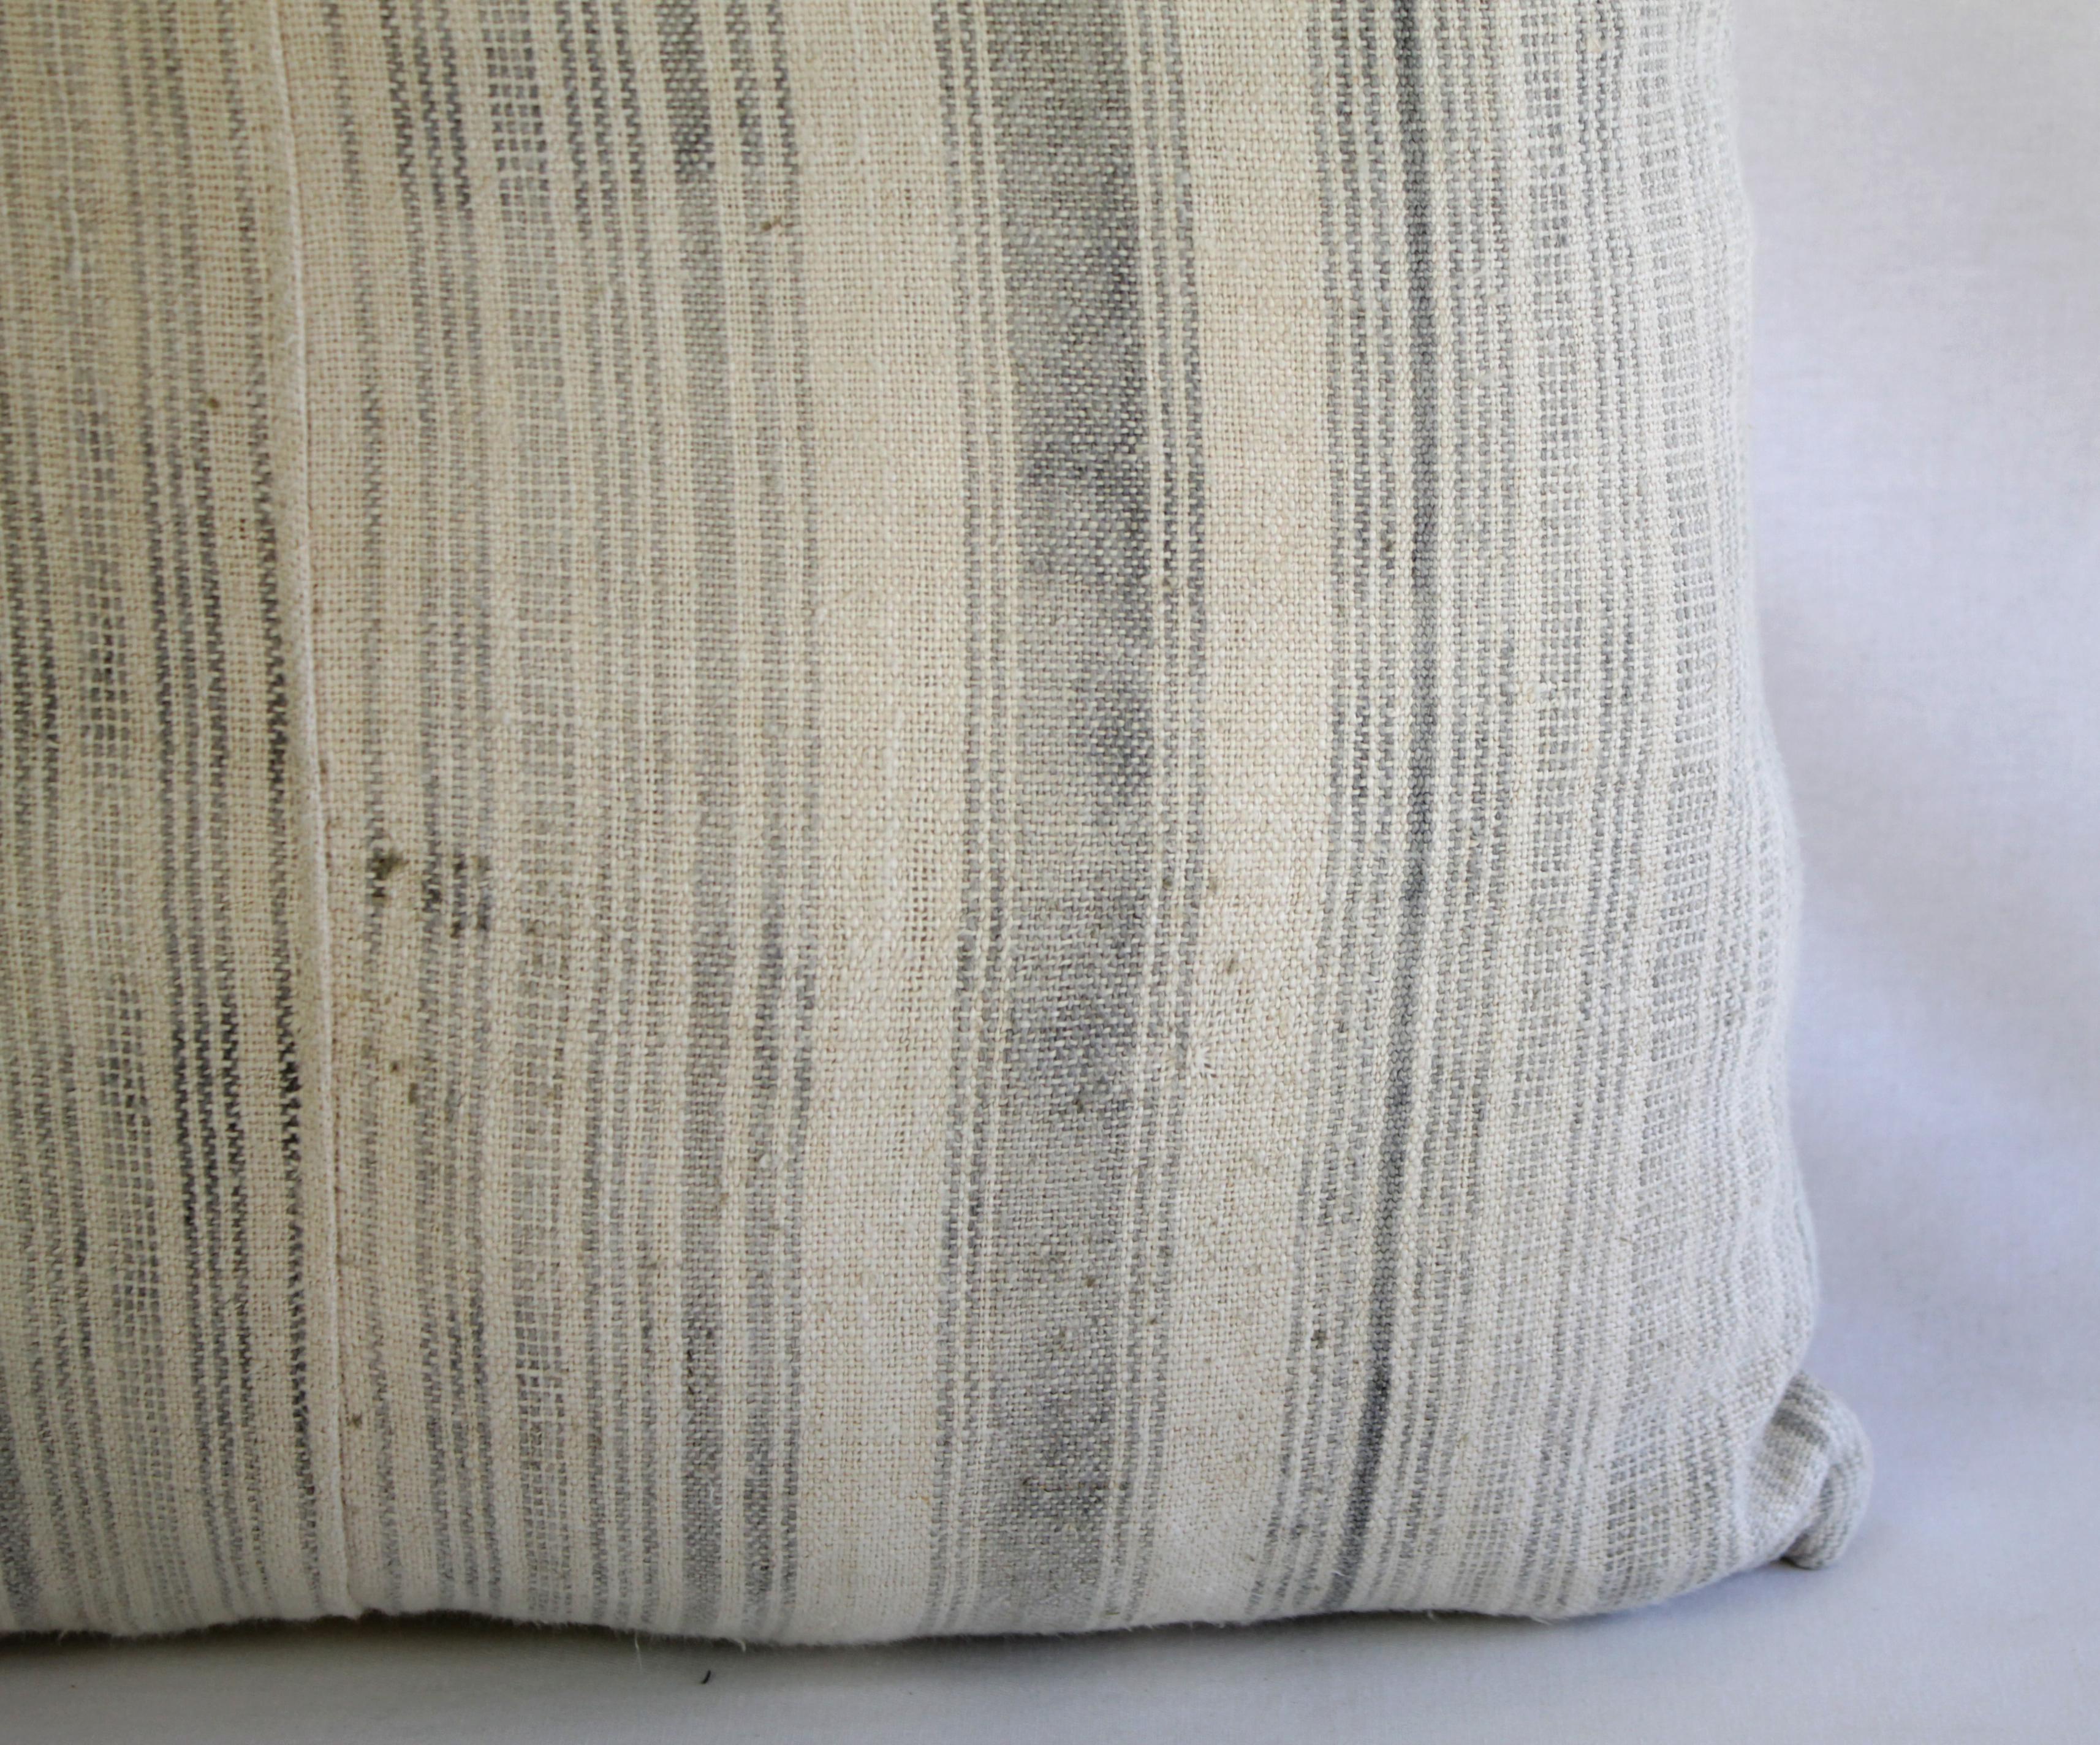 19th Century Antique Homespun Linen and Striped Grain Sack Pillow Light Grey